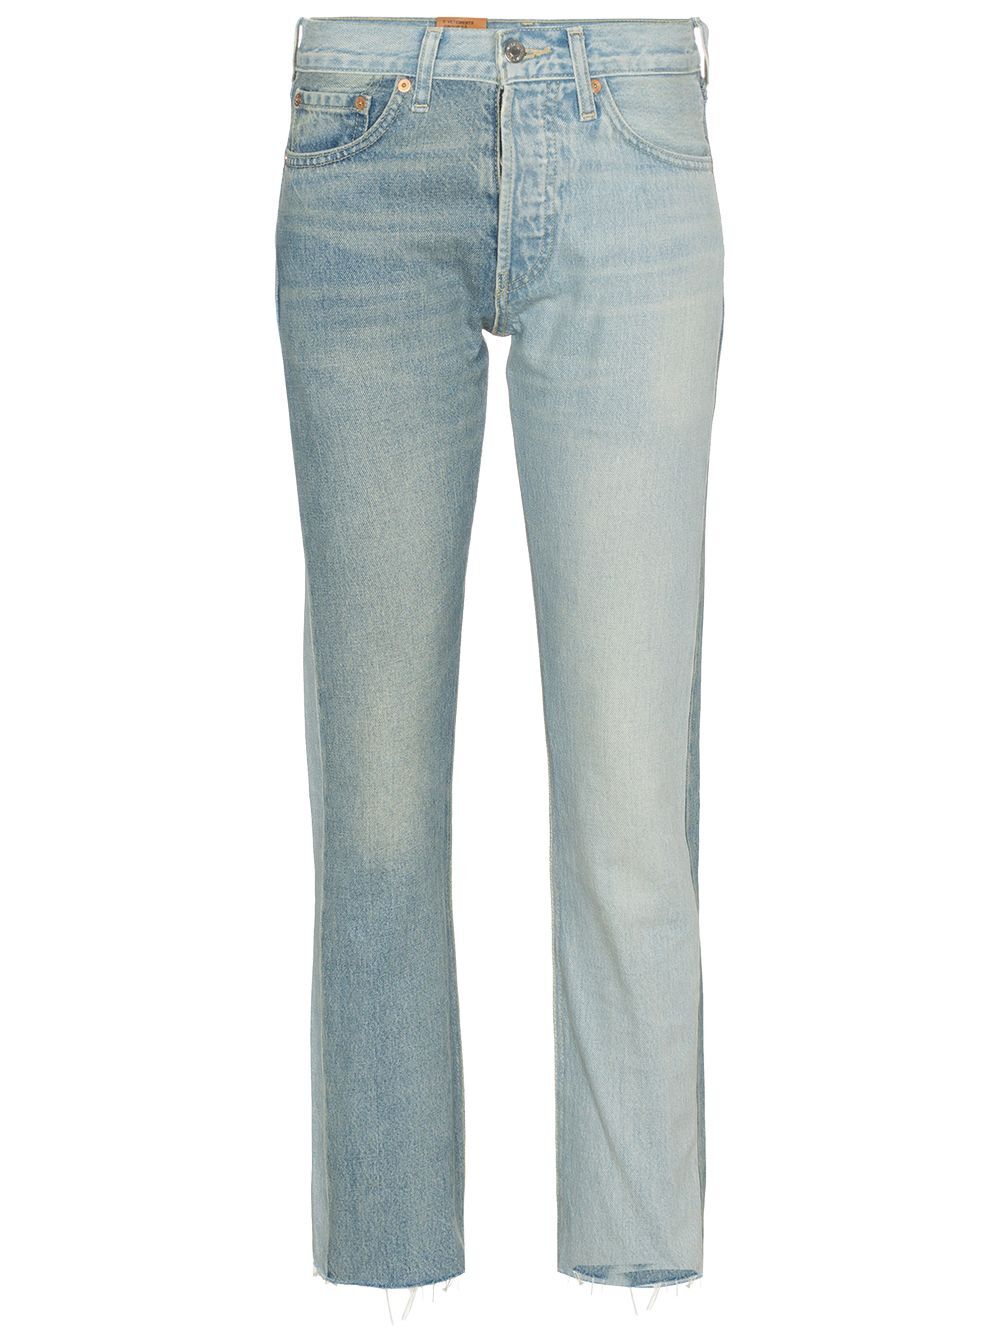 VETEMENTS x Levi 501 mid rise straight-leg jeans - Blue